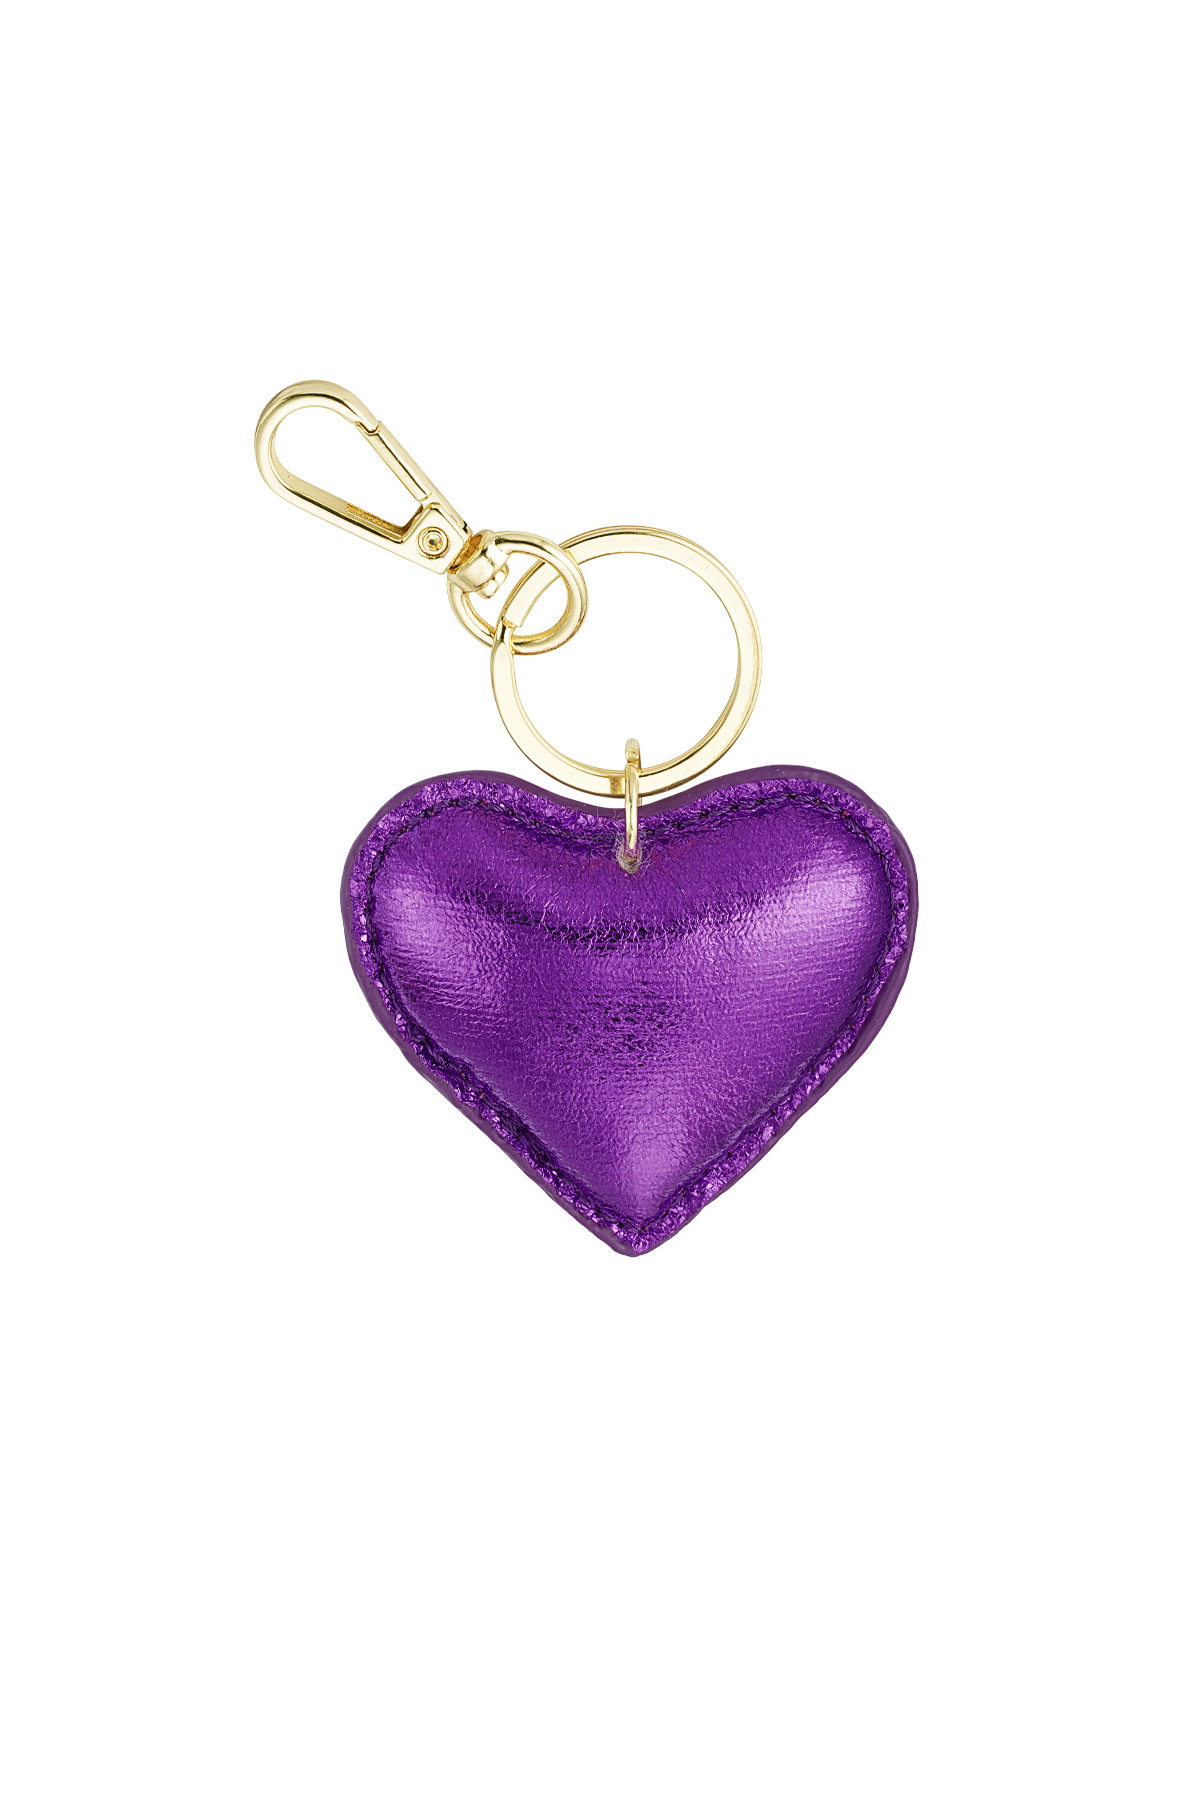 Keychain heart - purple h5 